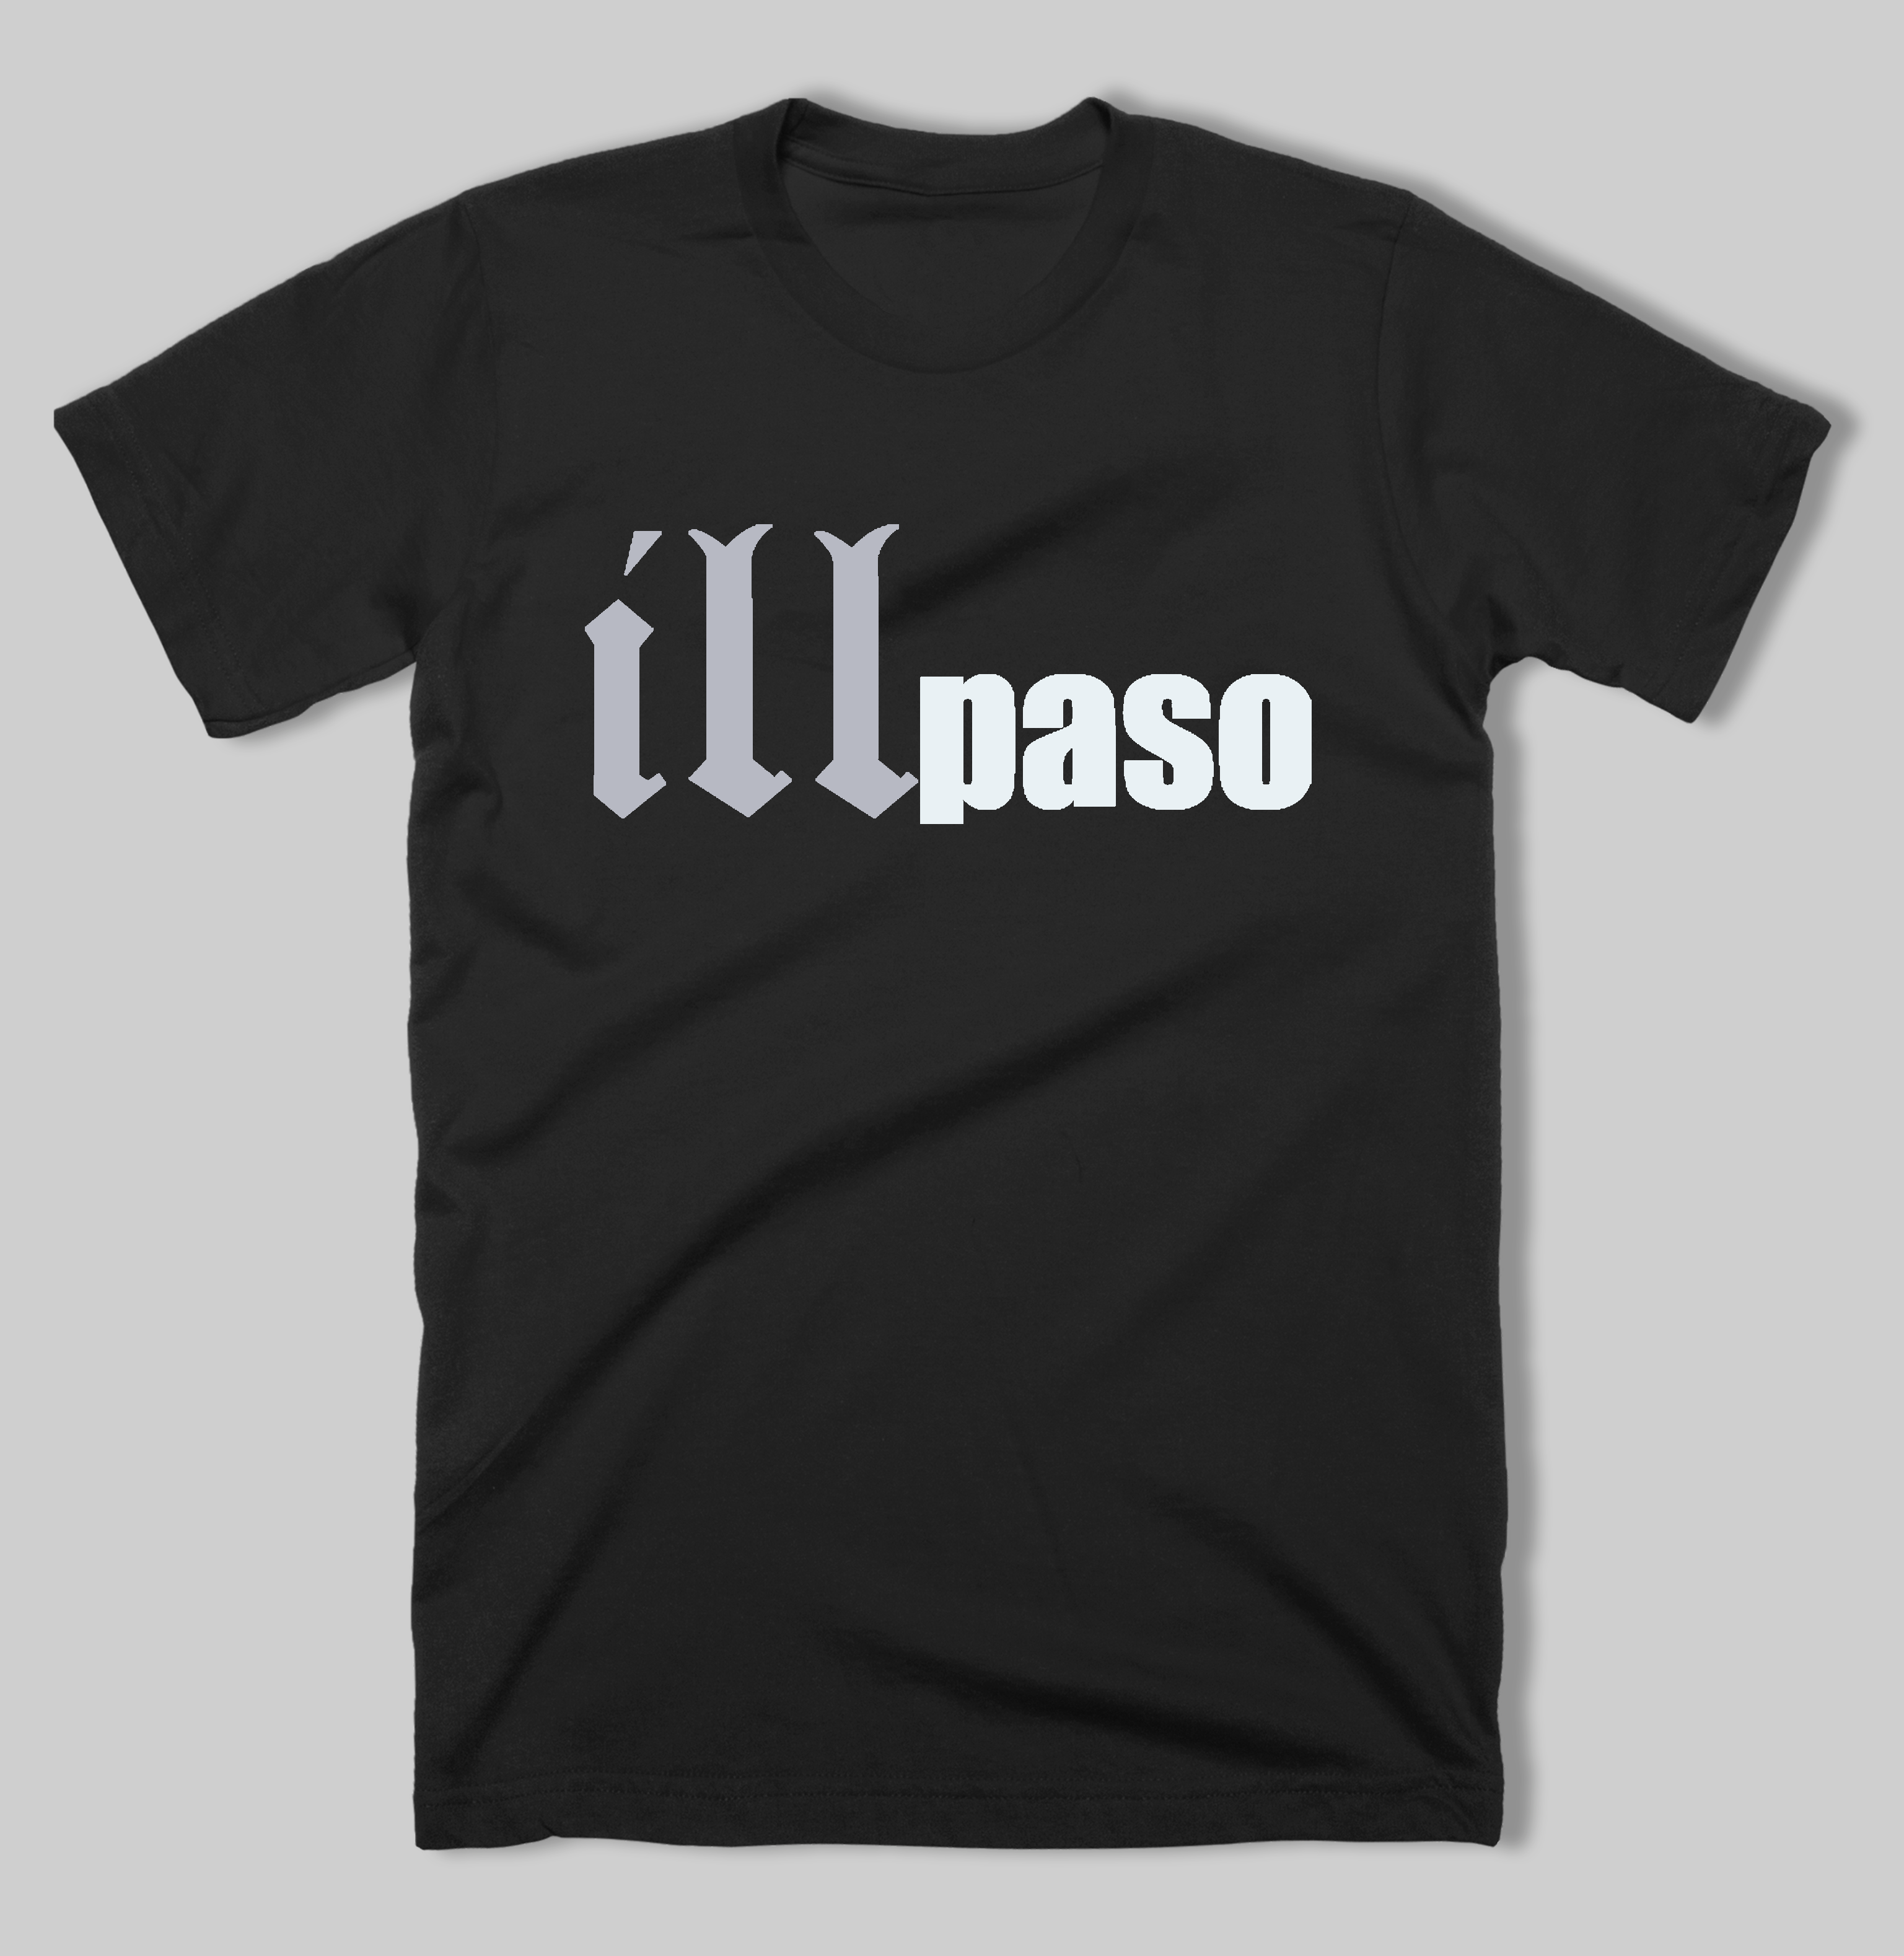 "illmatic Tribute" Men's T-shirt (Black Alternate Grey Color Way) by illpaso